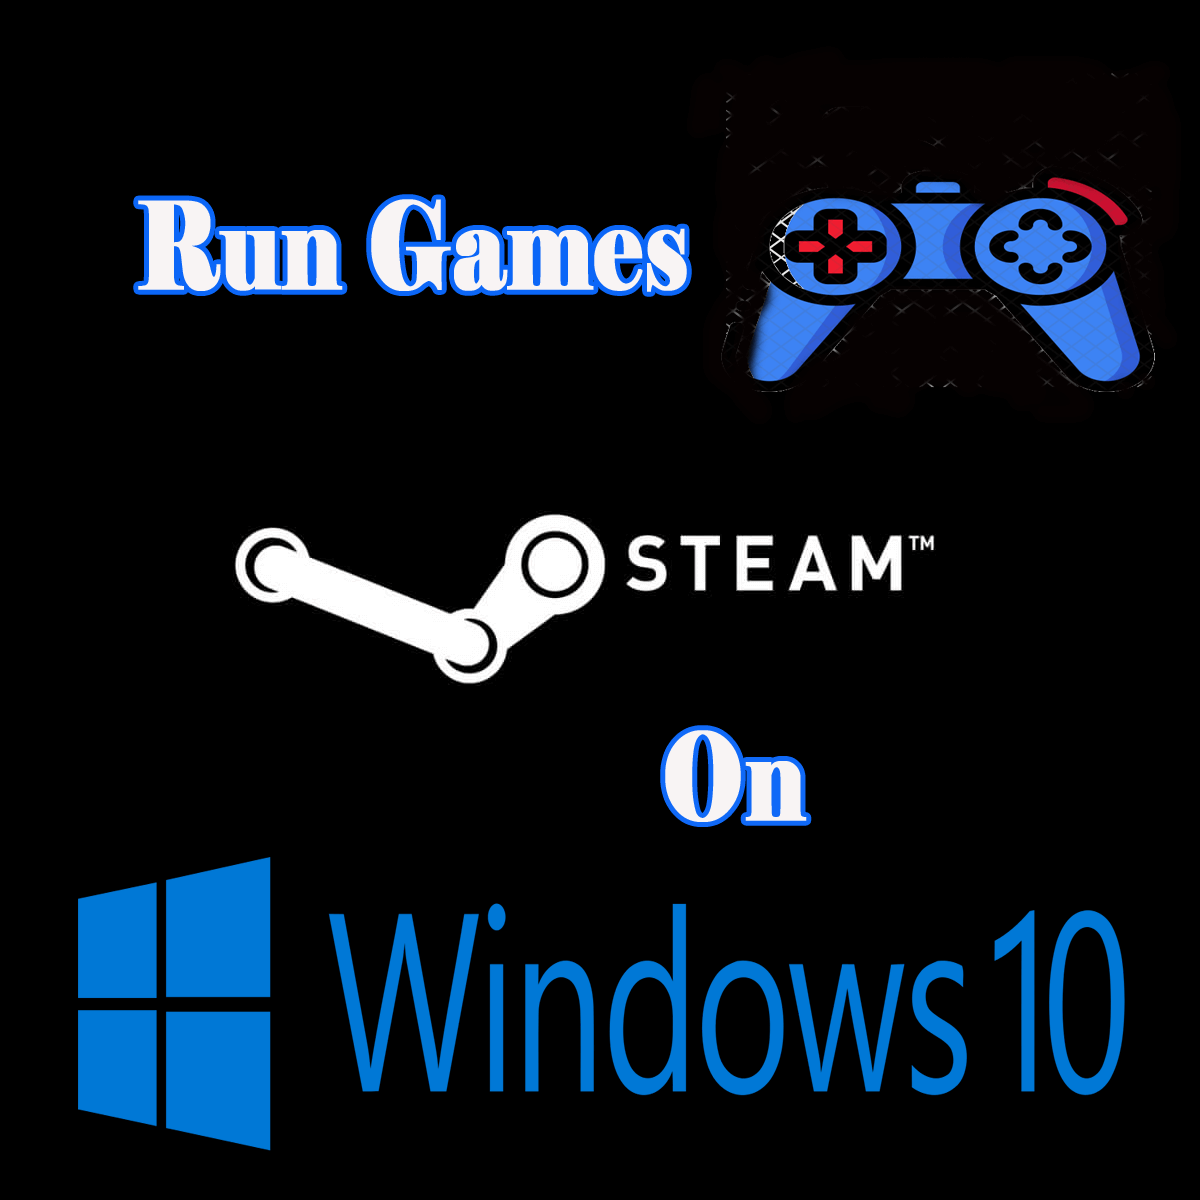 windows 10 games not working